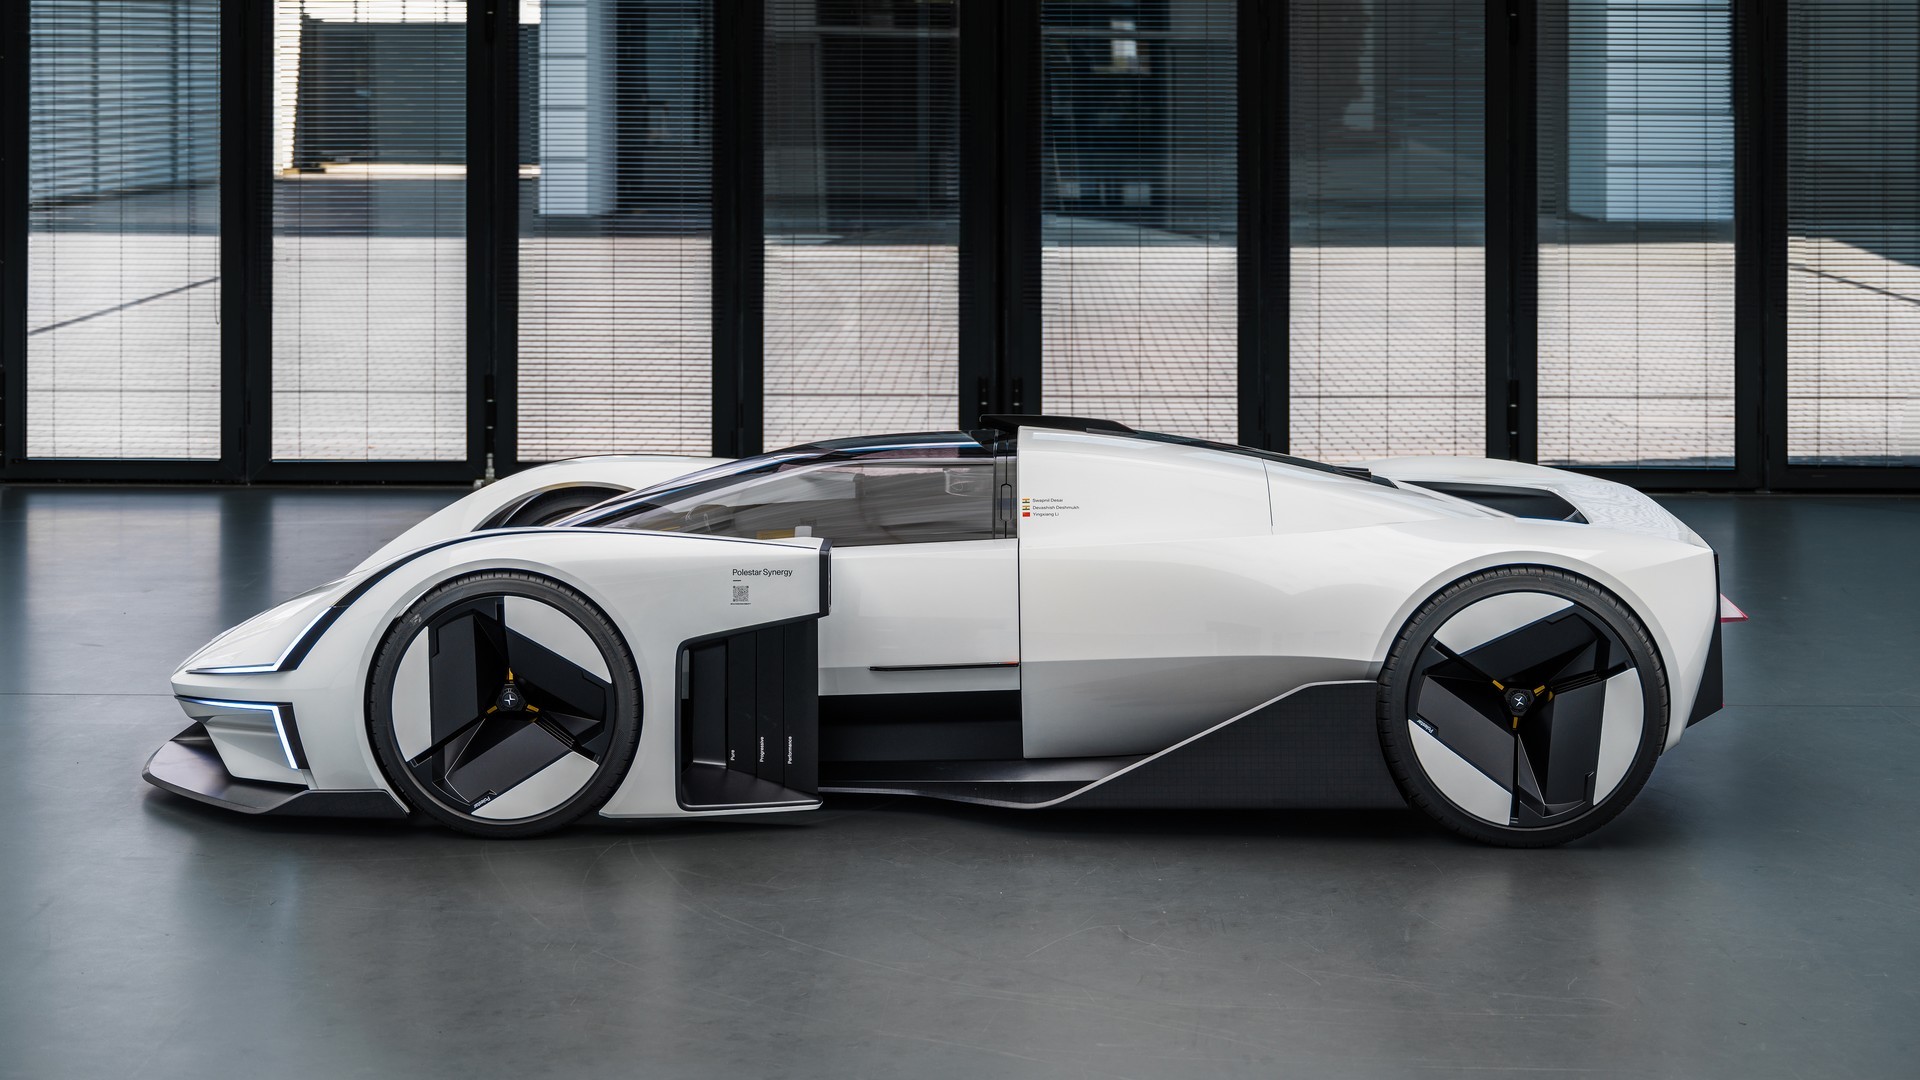 polestar unveils synergy electric fantasy supercar